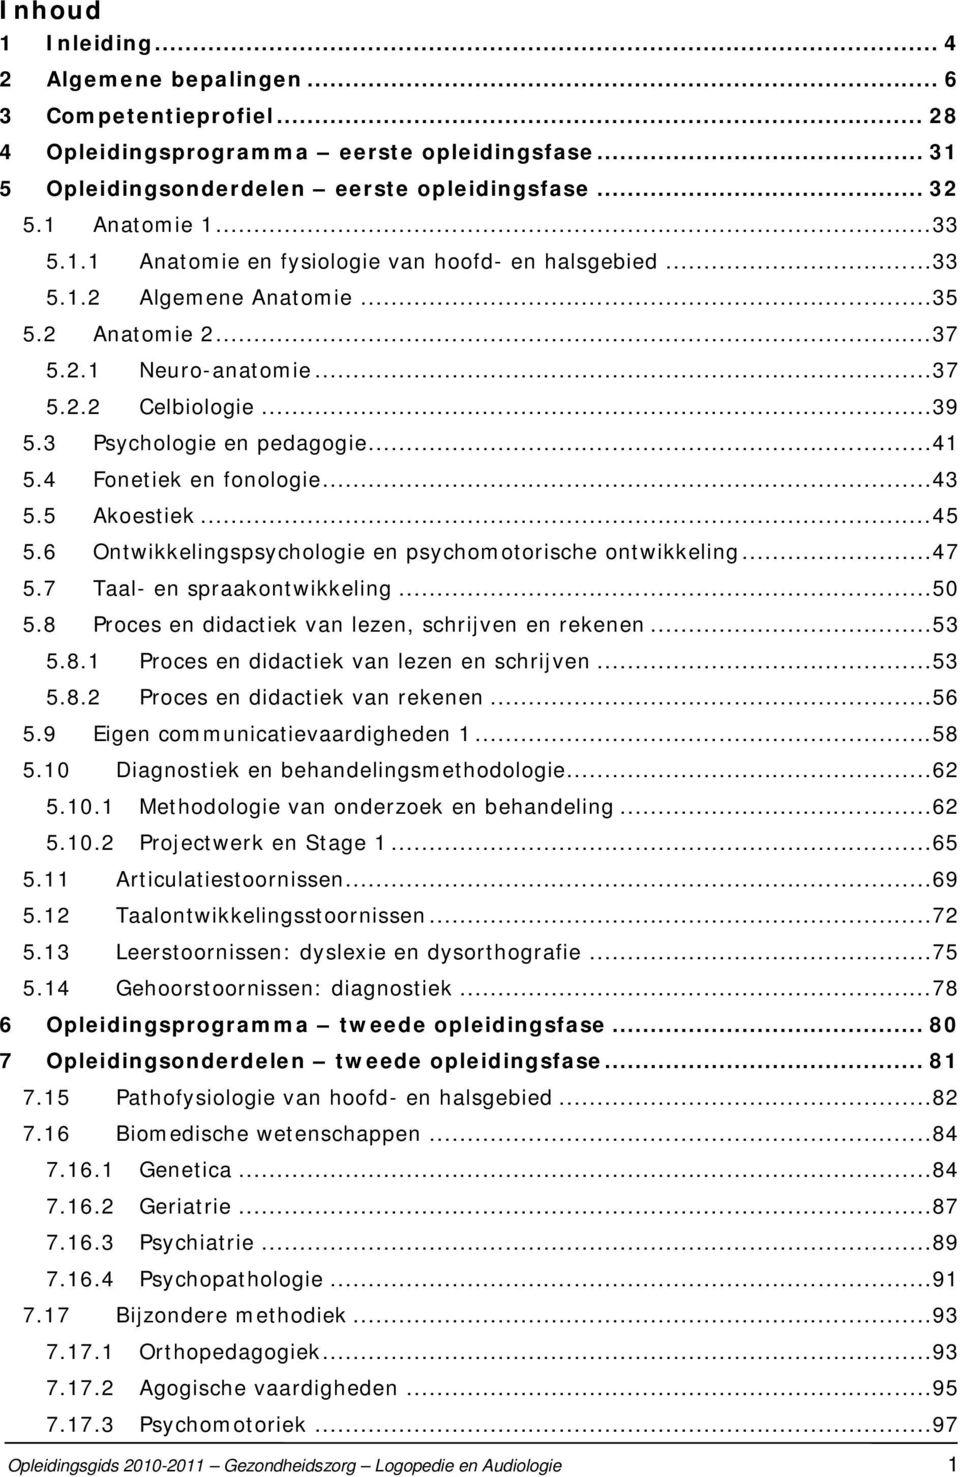 4 Fonetiek en fonologie...43 5.5 Akoestiek...45 5.6 Ontwikkelingspsychologie en psychomotorische ontwikkeling...47 5.7 Taal- en spraakontwikkeling...50 5.